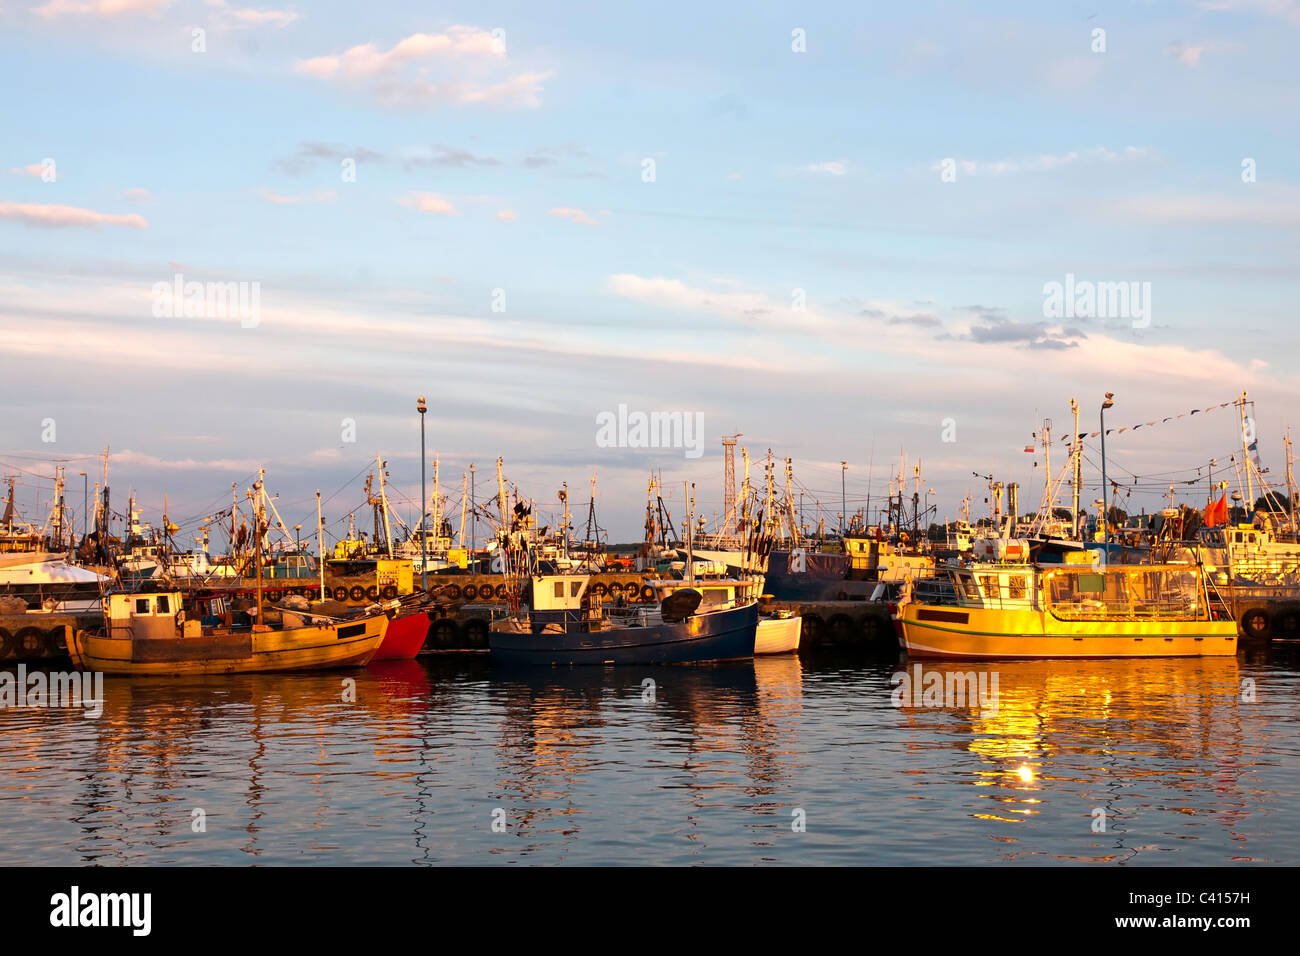 Marina at Sunset. Fishing boats and yachts in port. Stock Photo